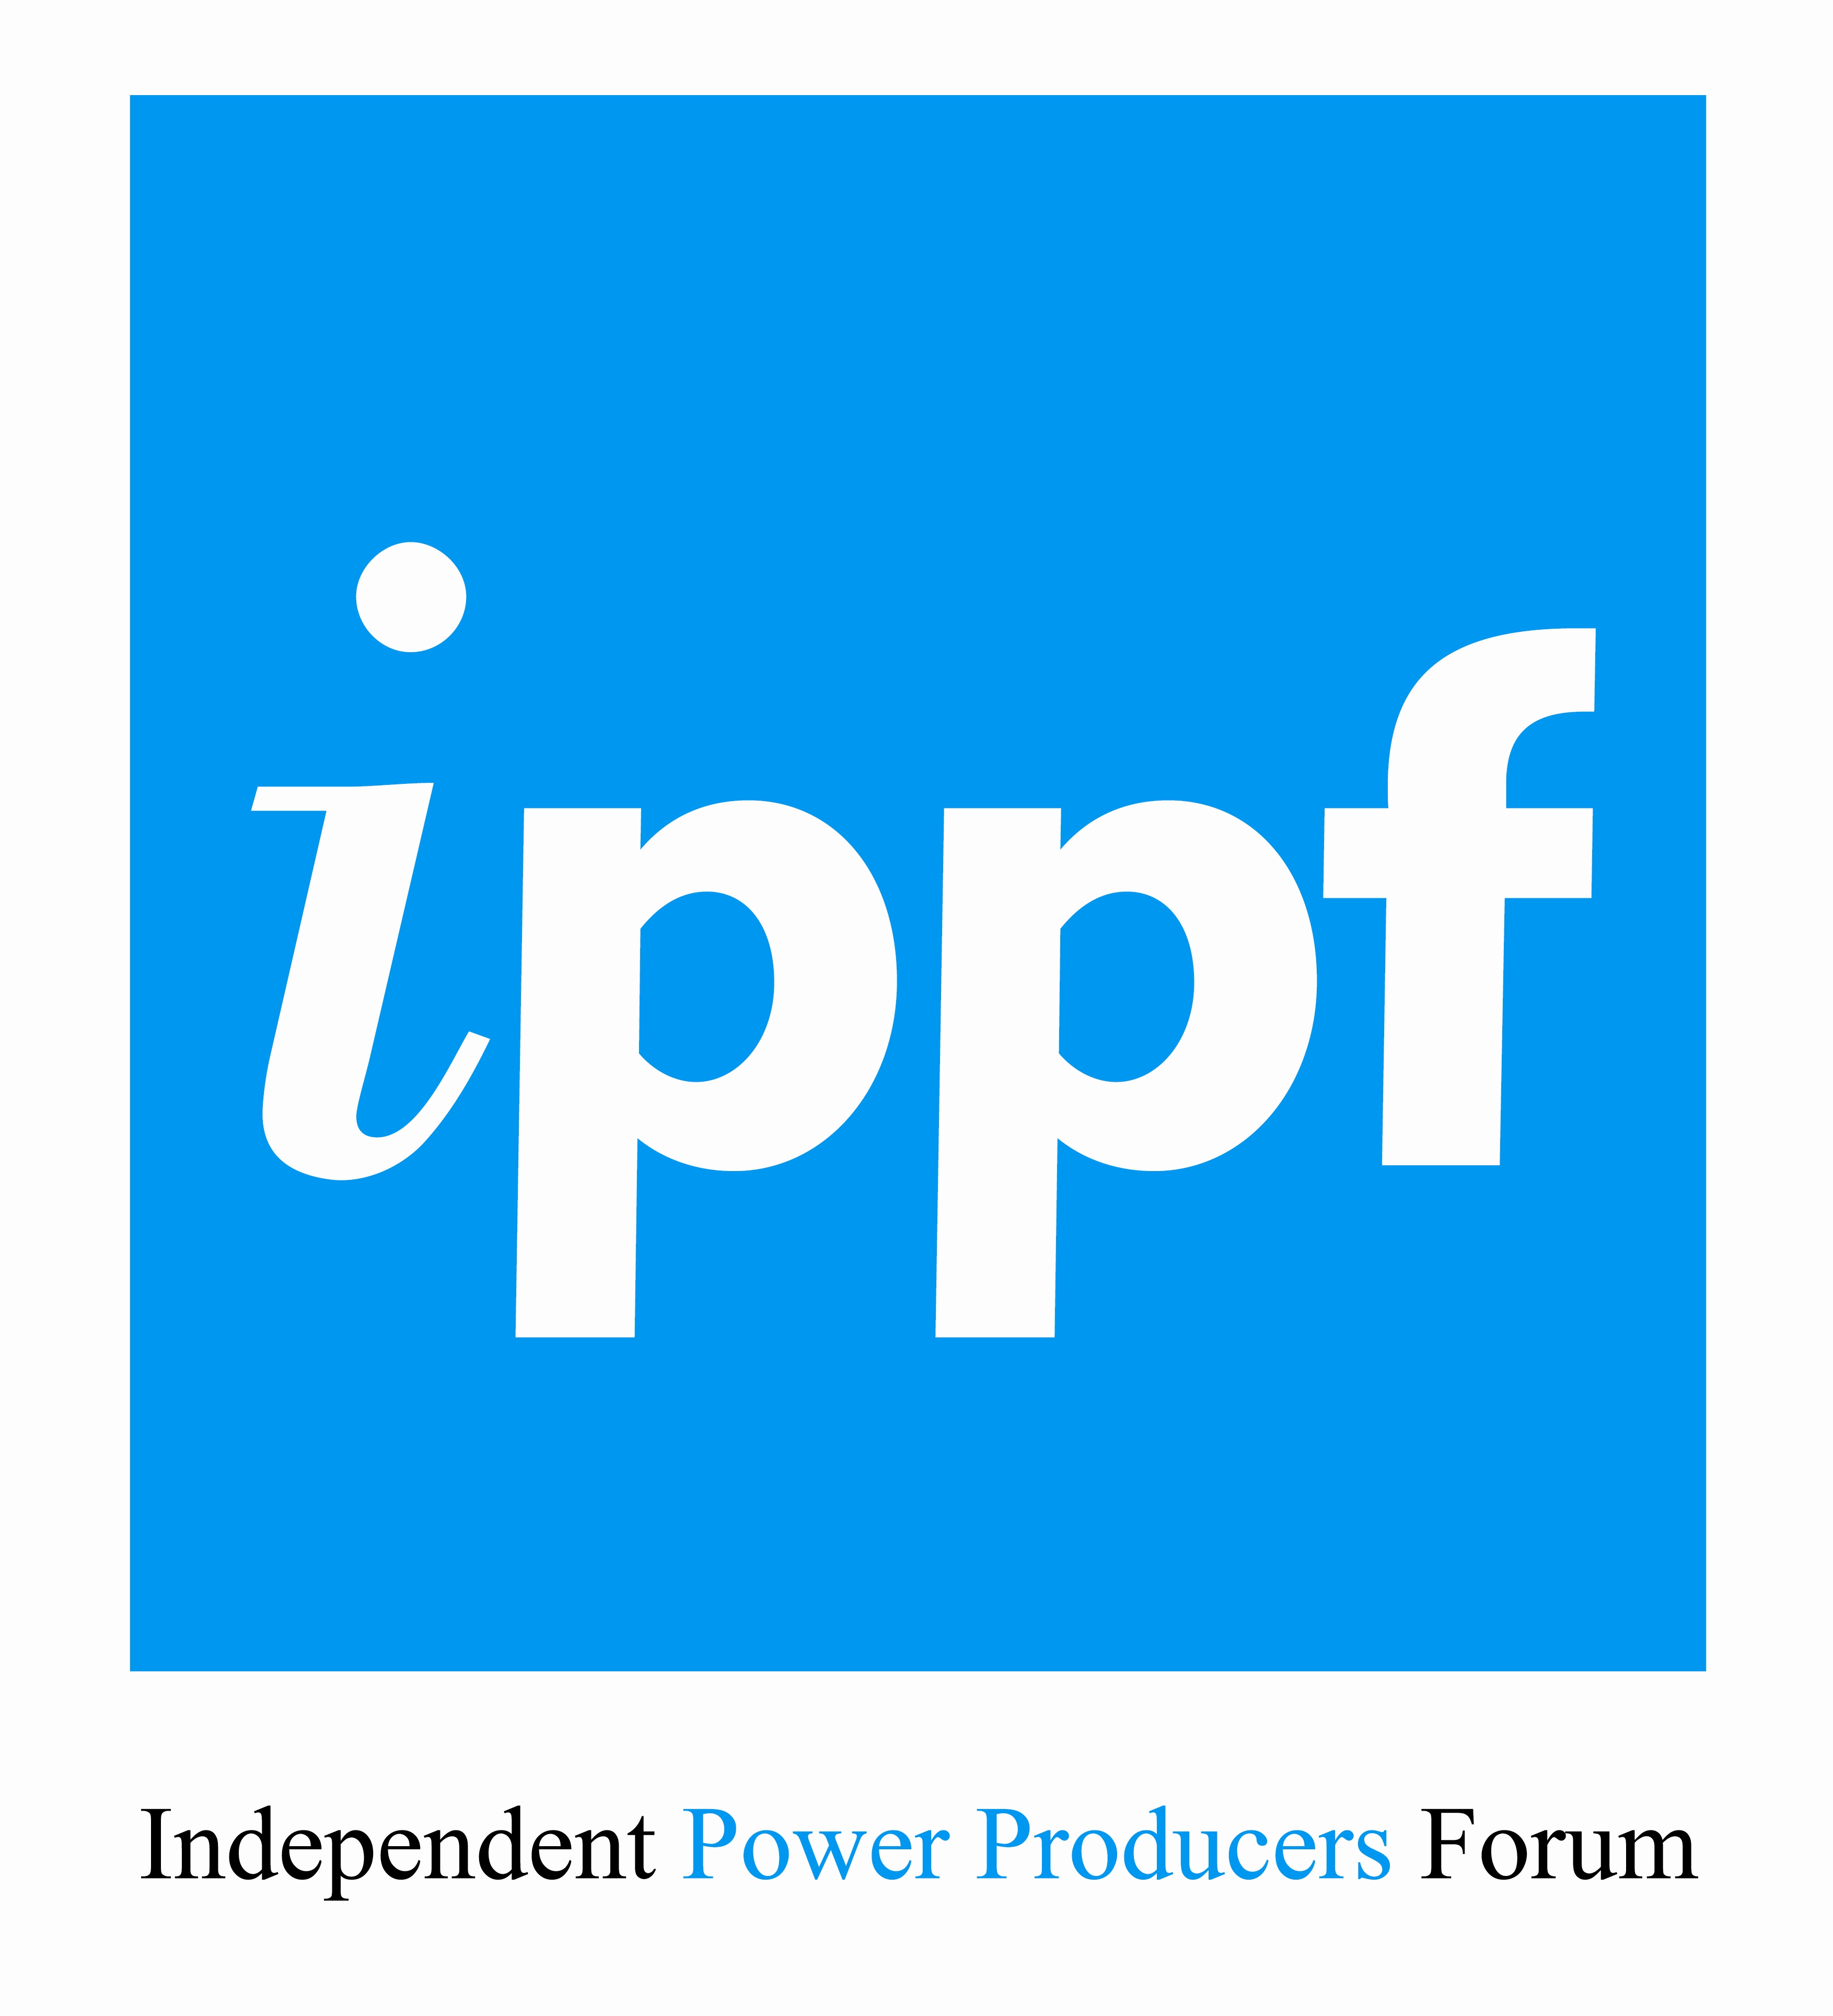 IPPF Logo (Vertical) 20121123